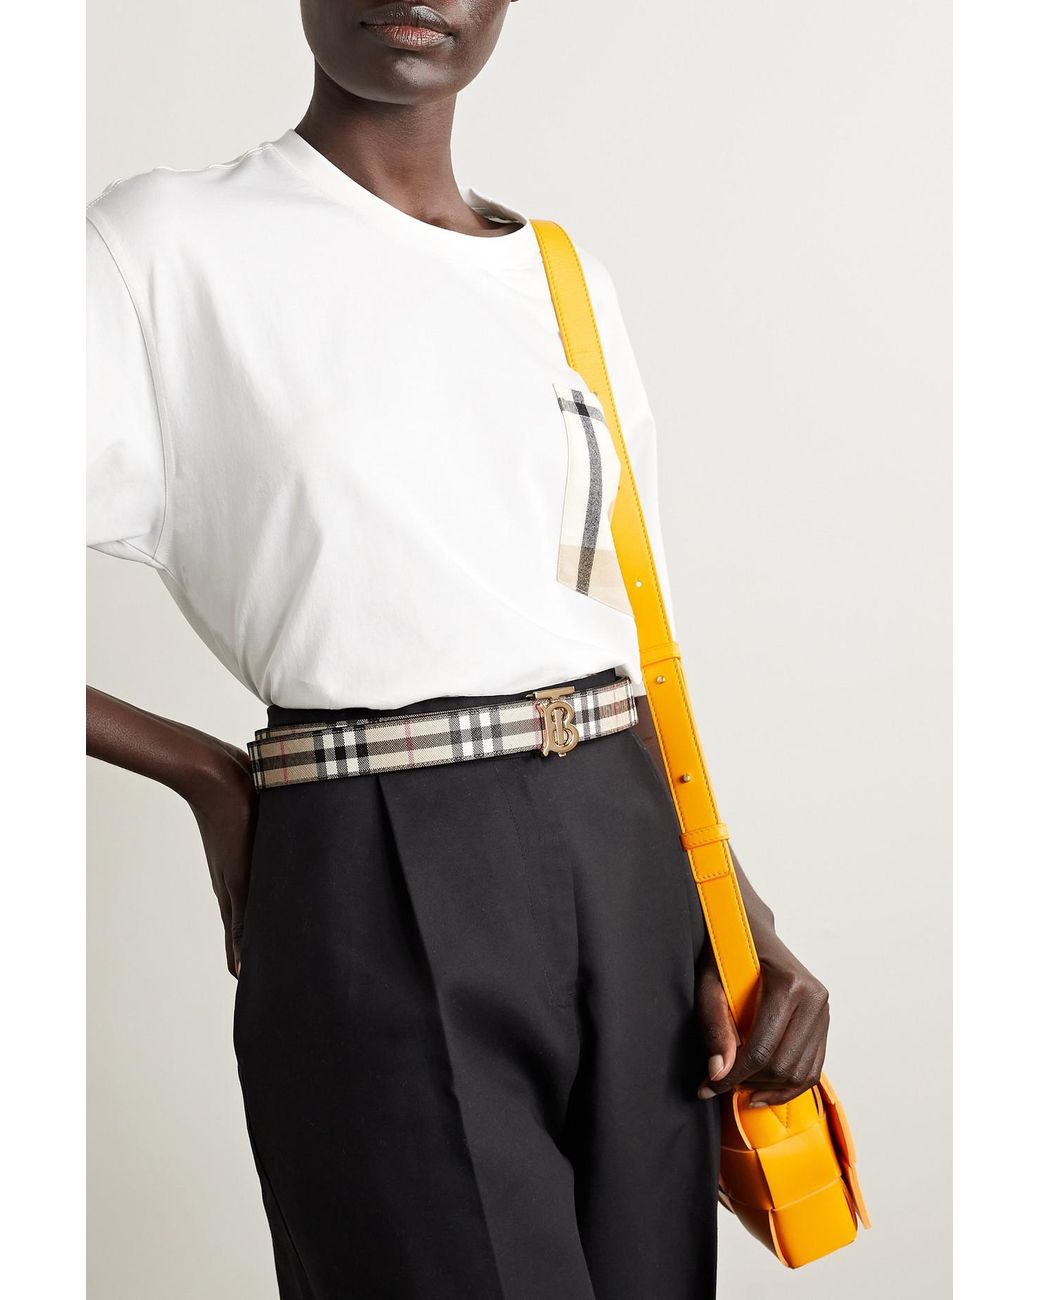 Women's Louis Vuitton Belts from C$589